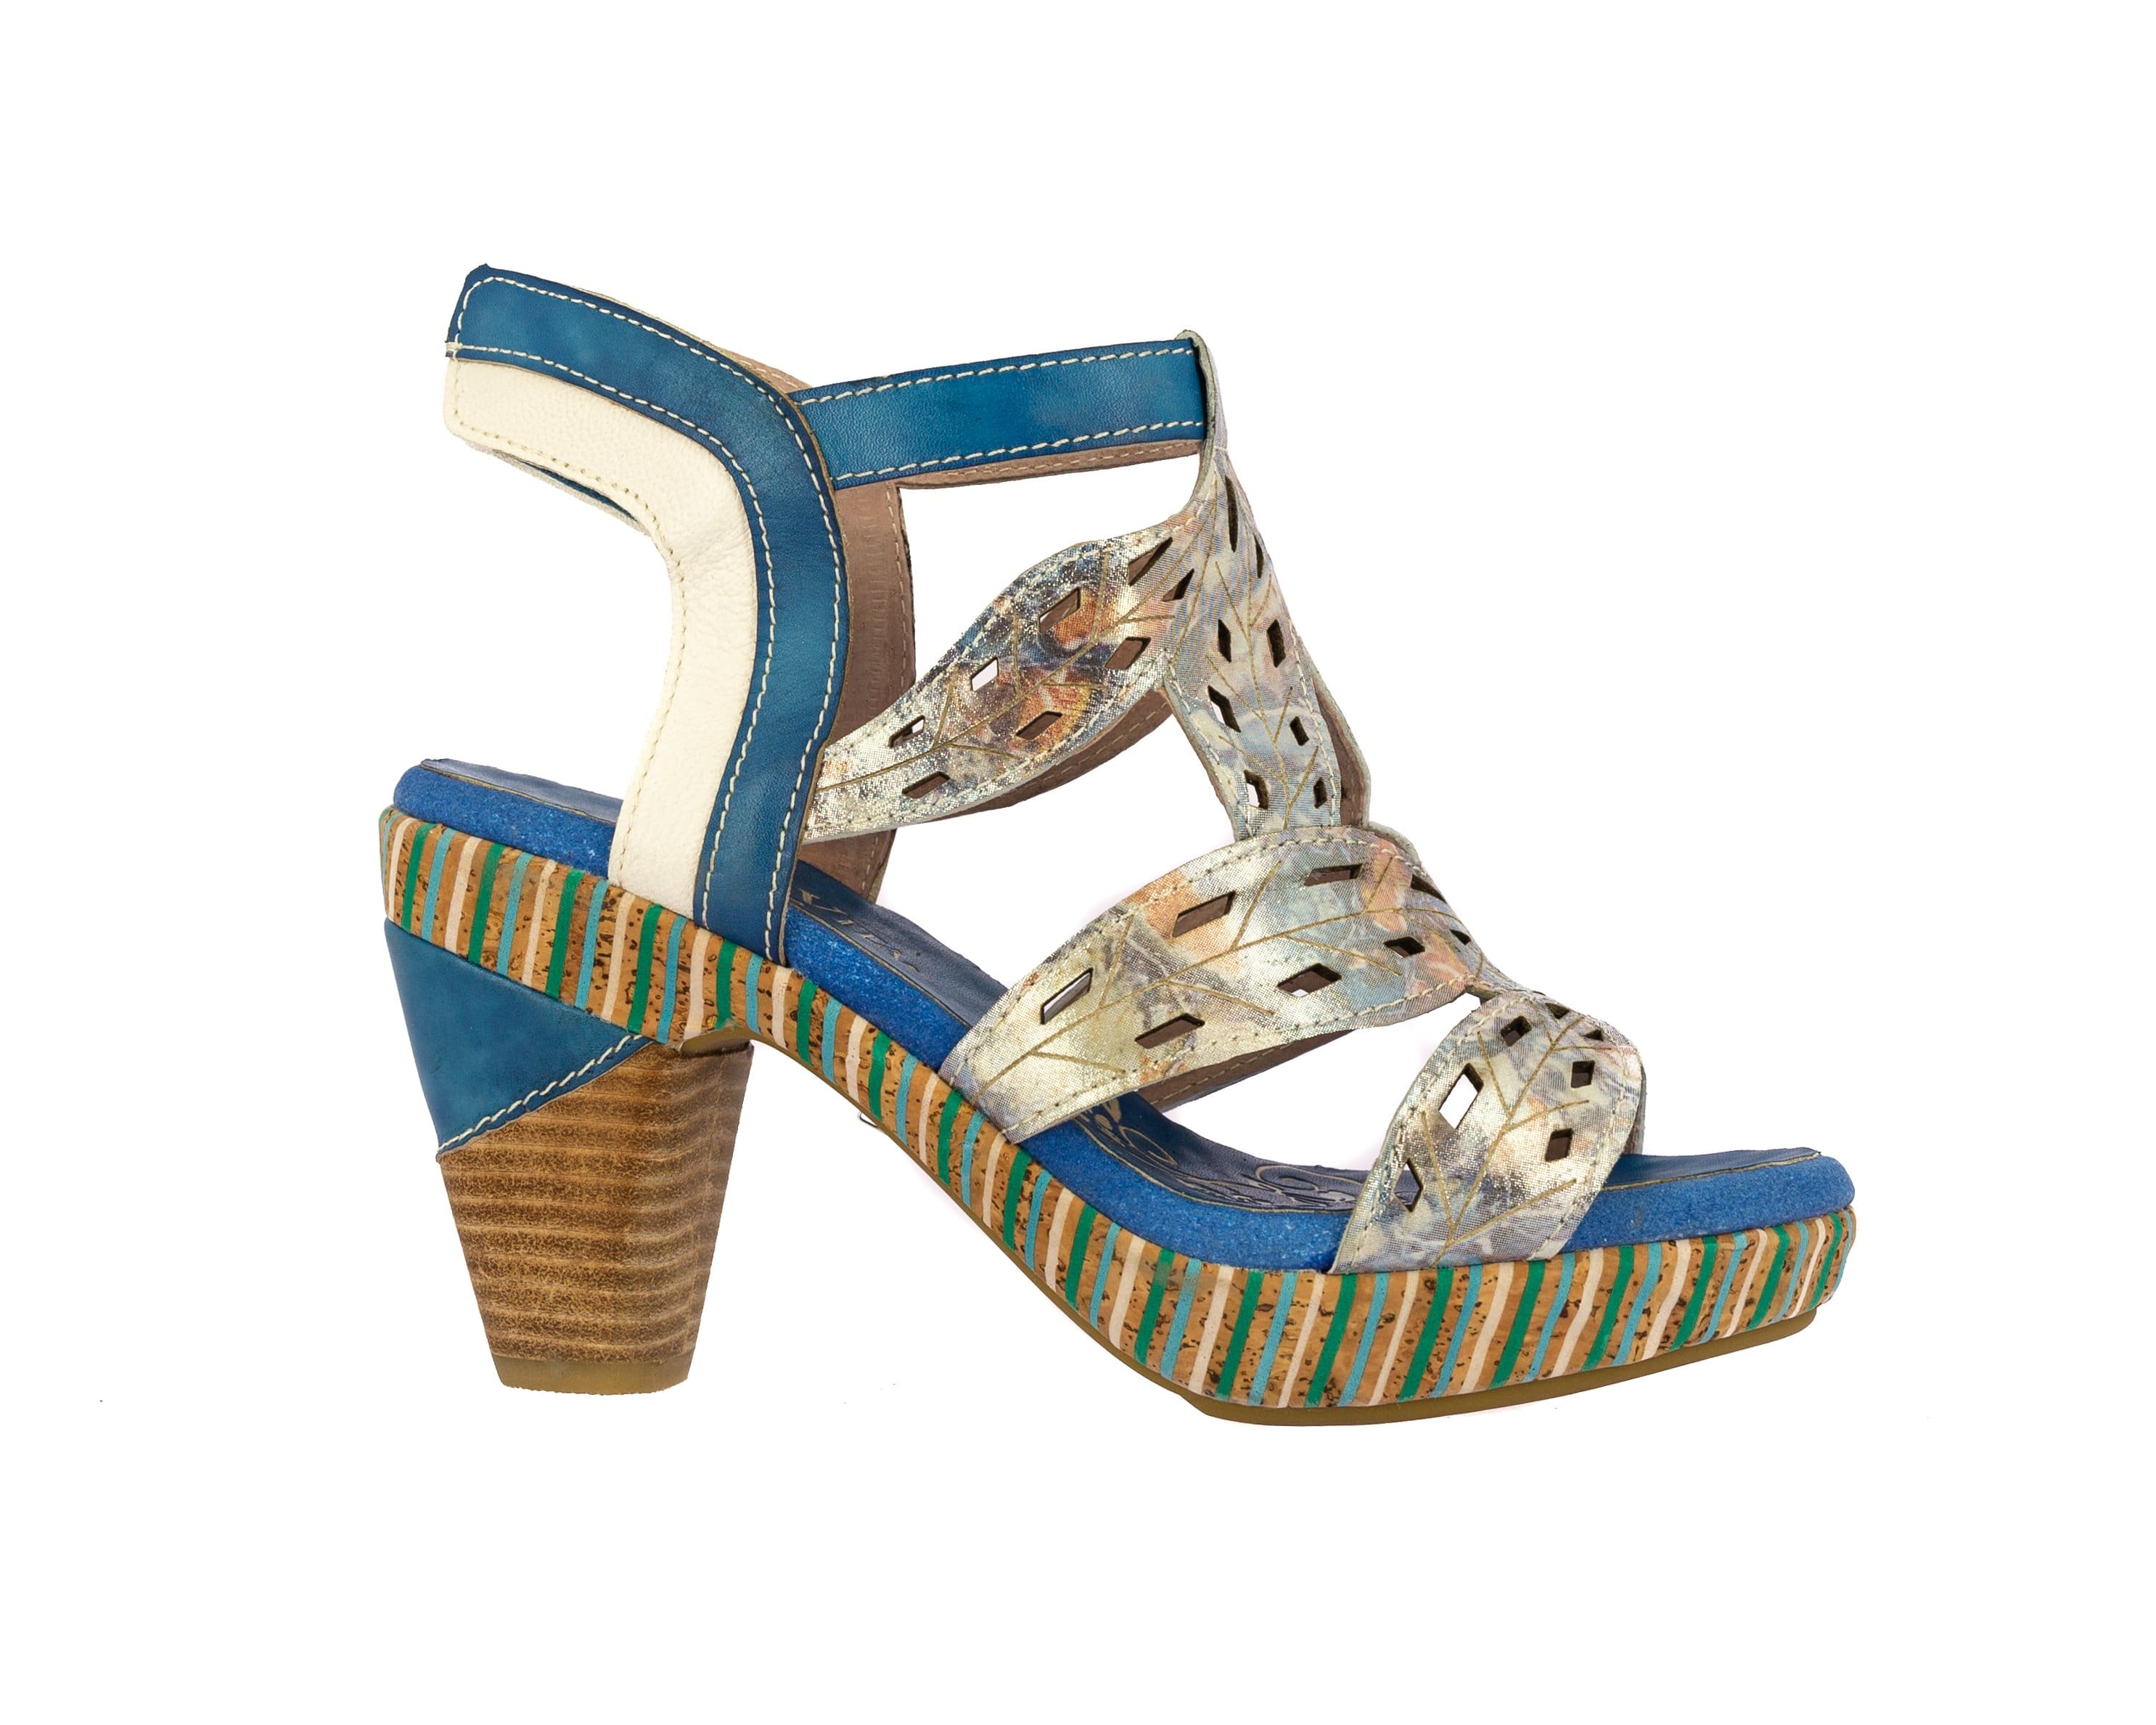 Schuhe FICNALO 12 - 35 / BLUE - Sandale